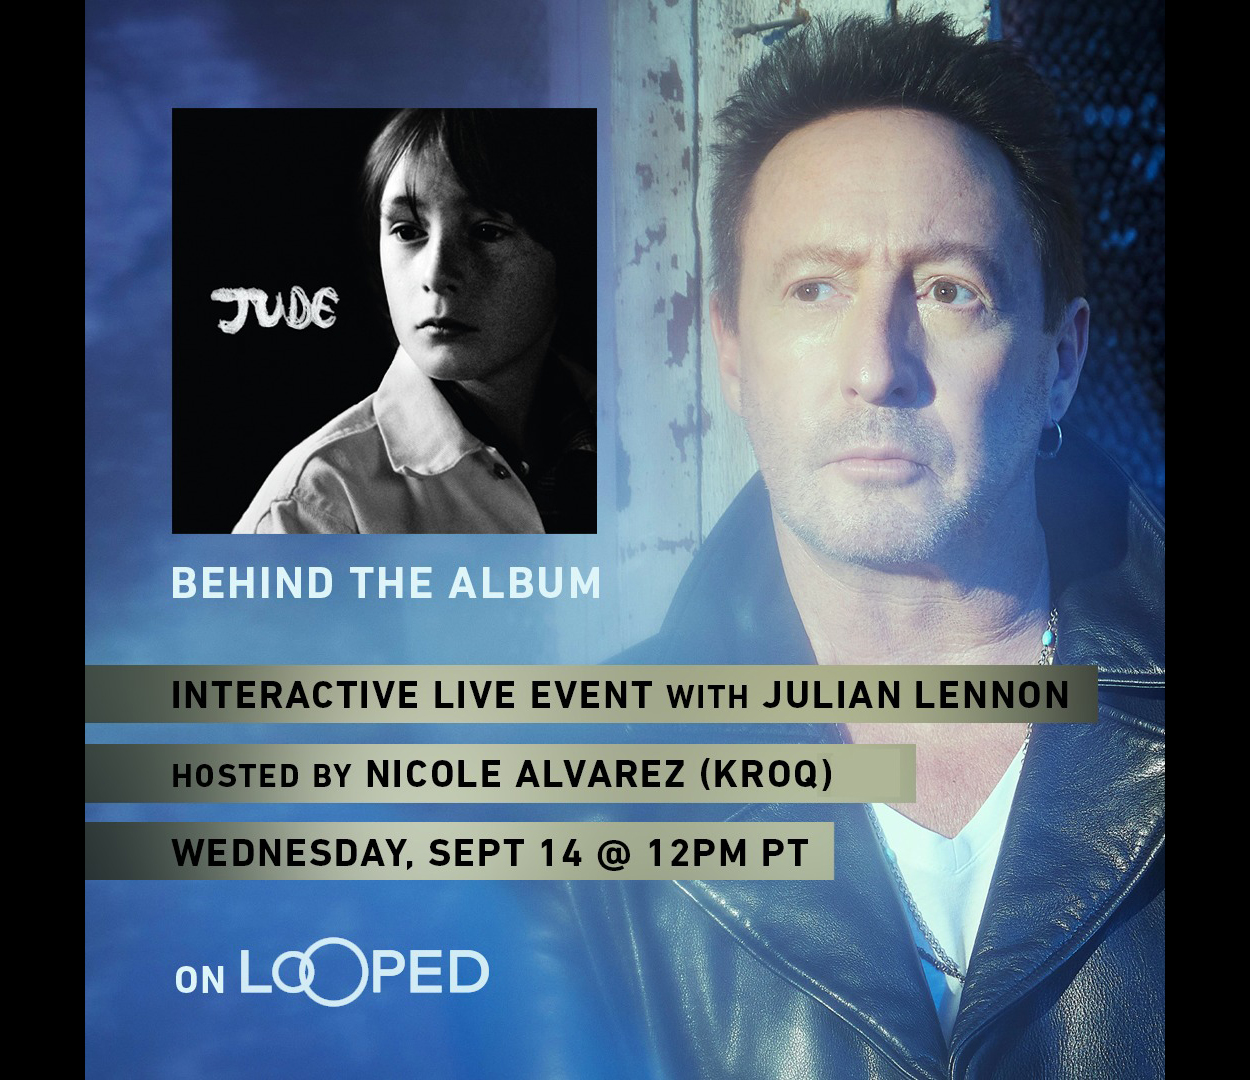 Julian To Host “jude Behind The Album” An Interactive Fan Event Via